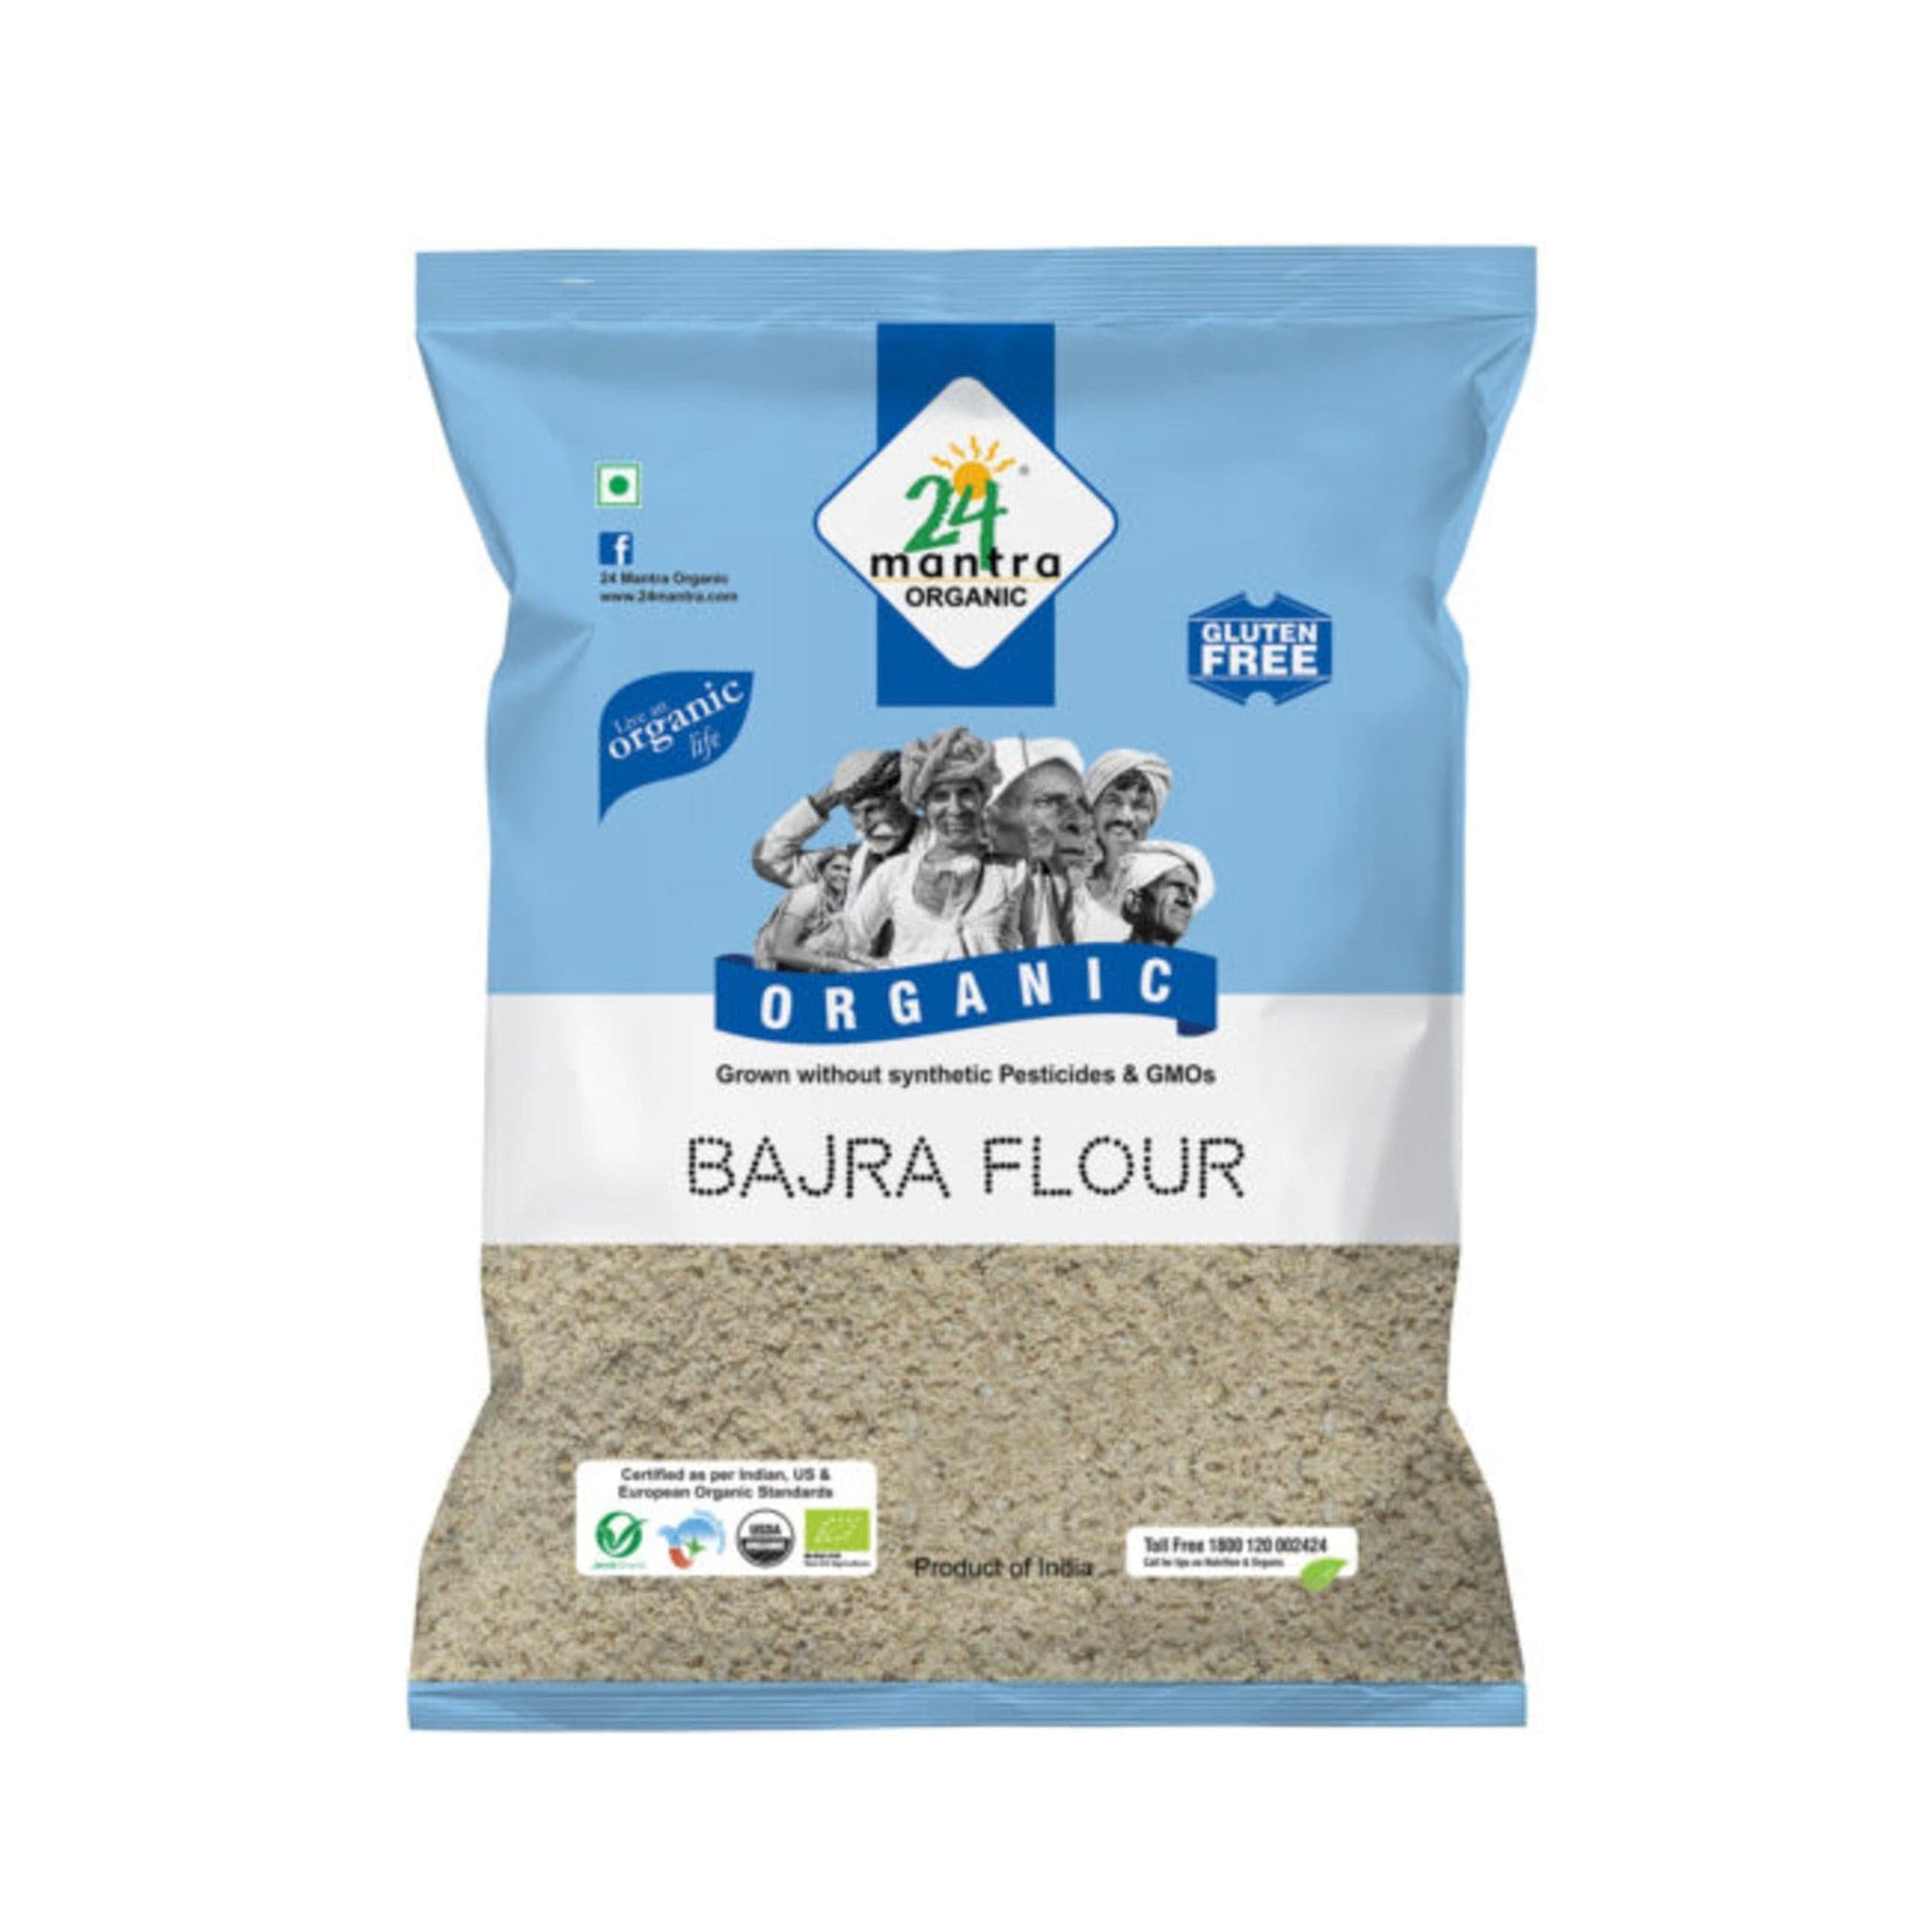 24 Mantra Organic Bajra Flour.